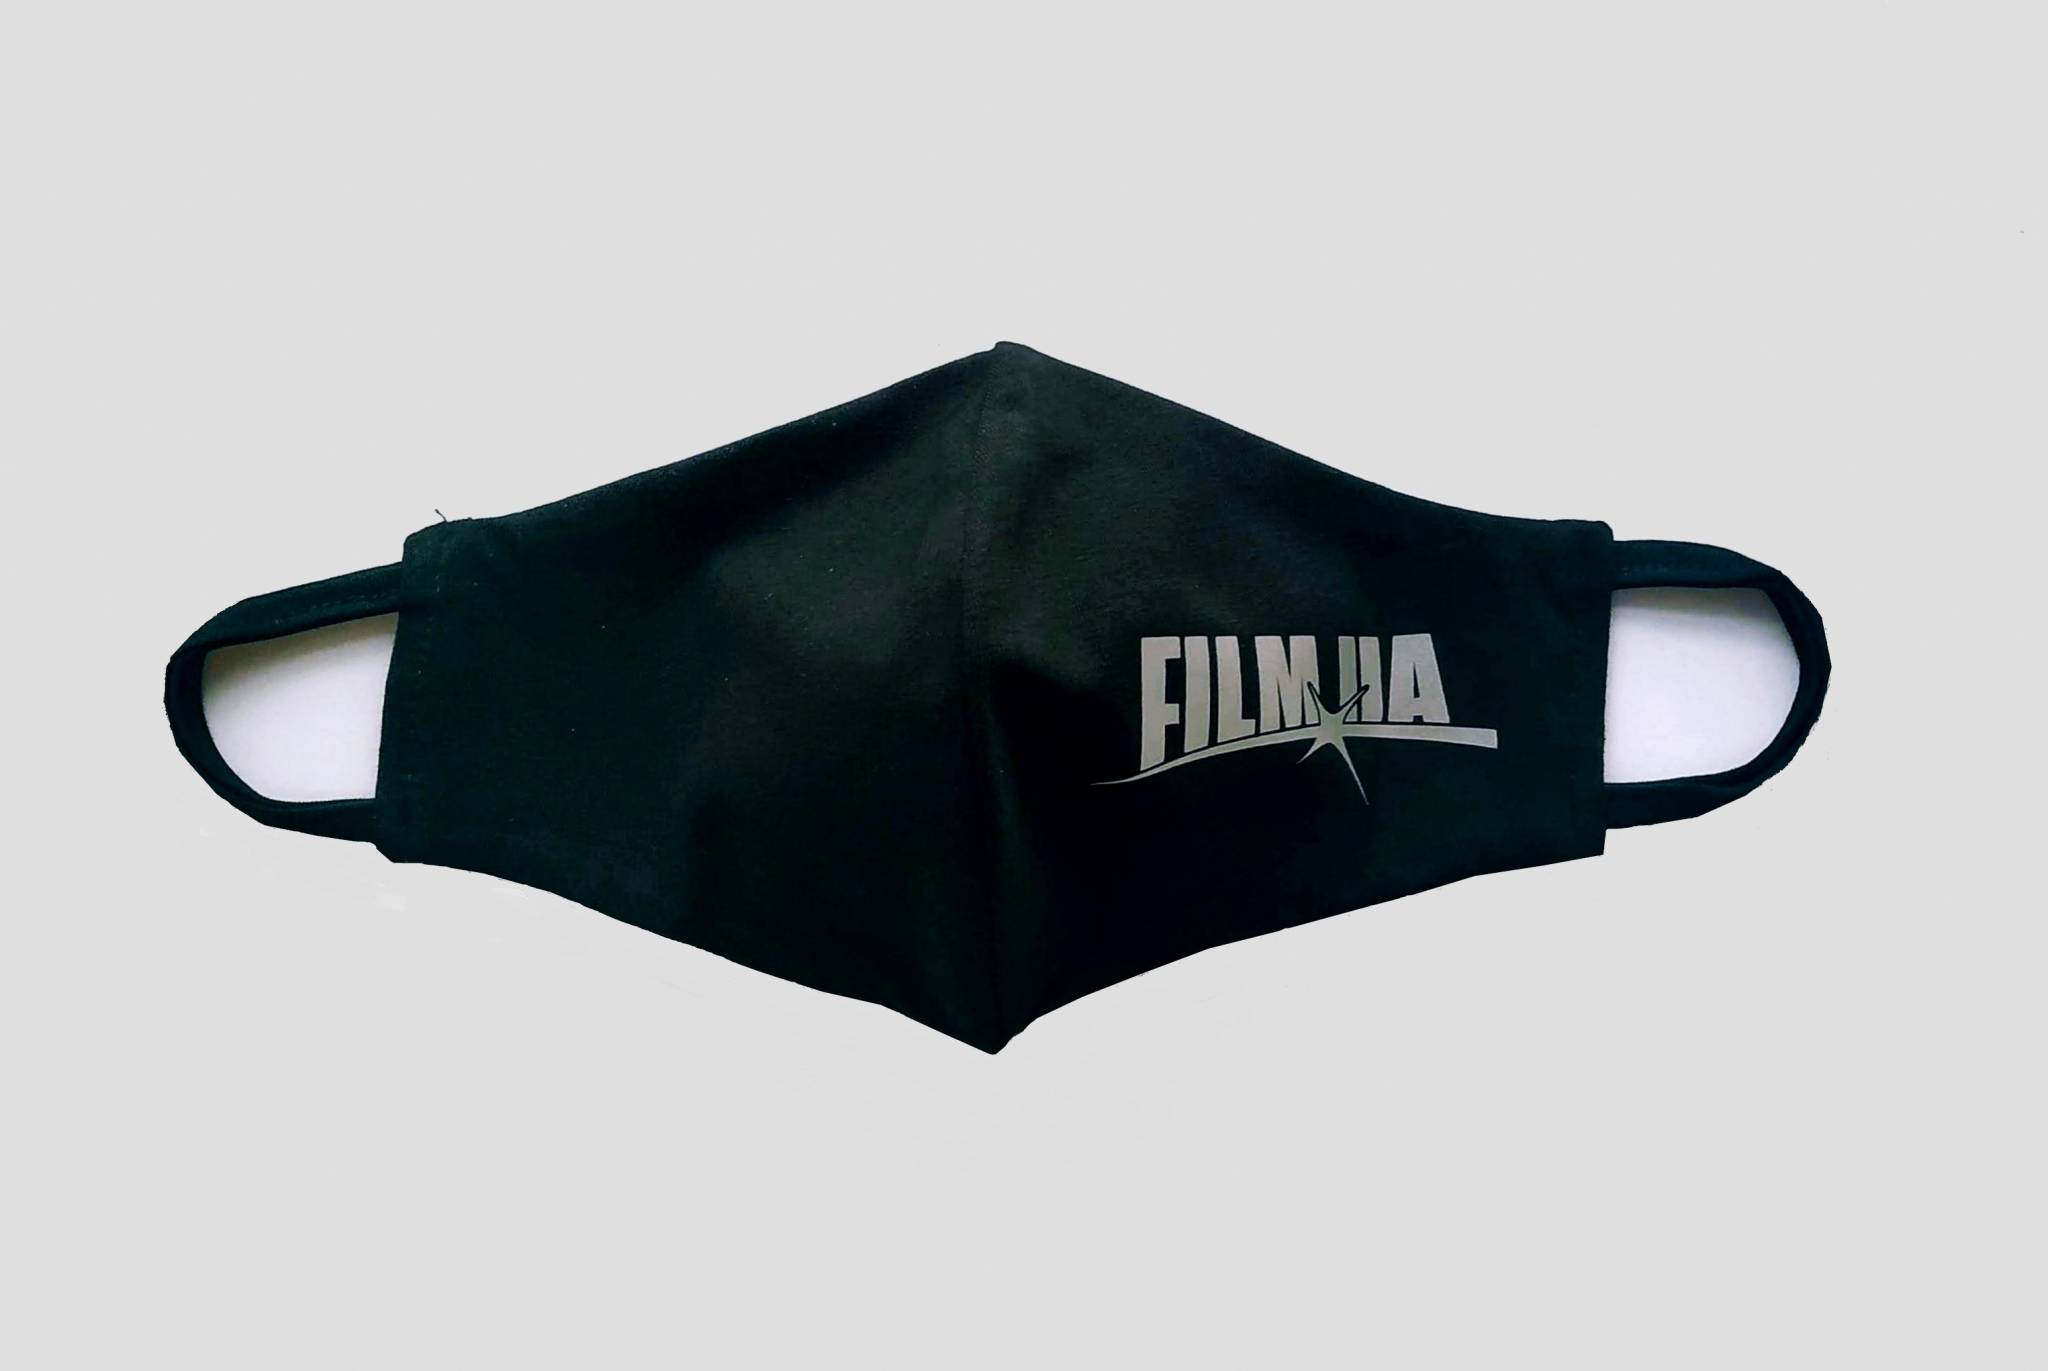 Protective mask with logo brand Film.ua